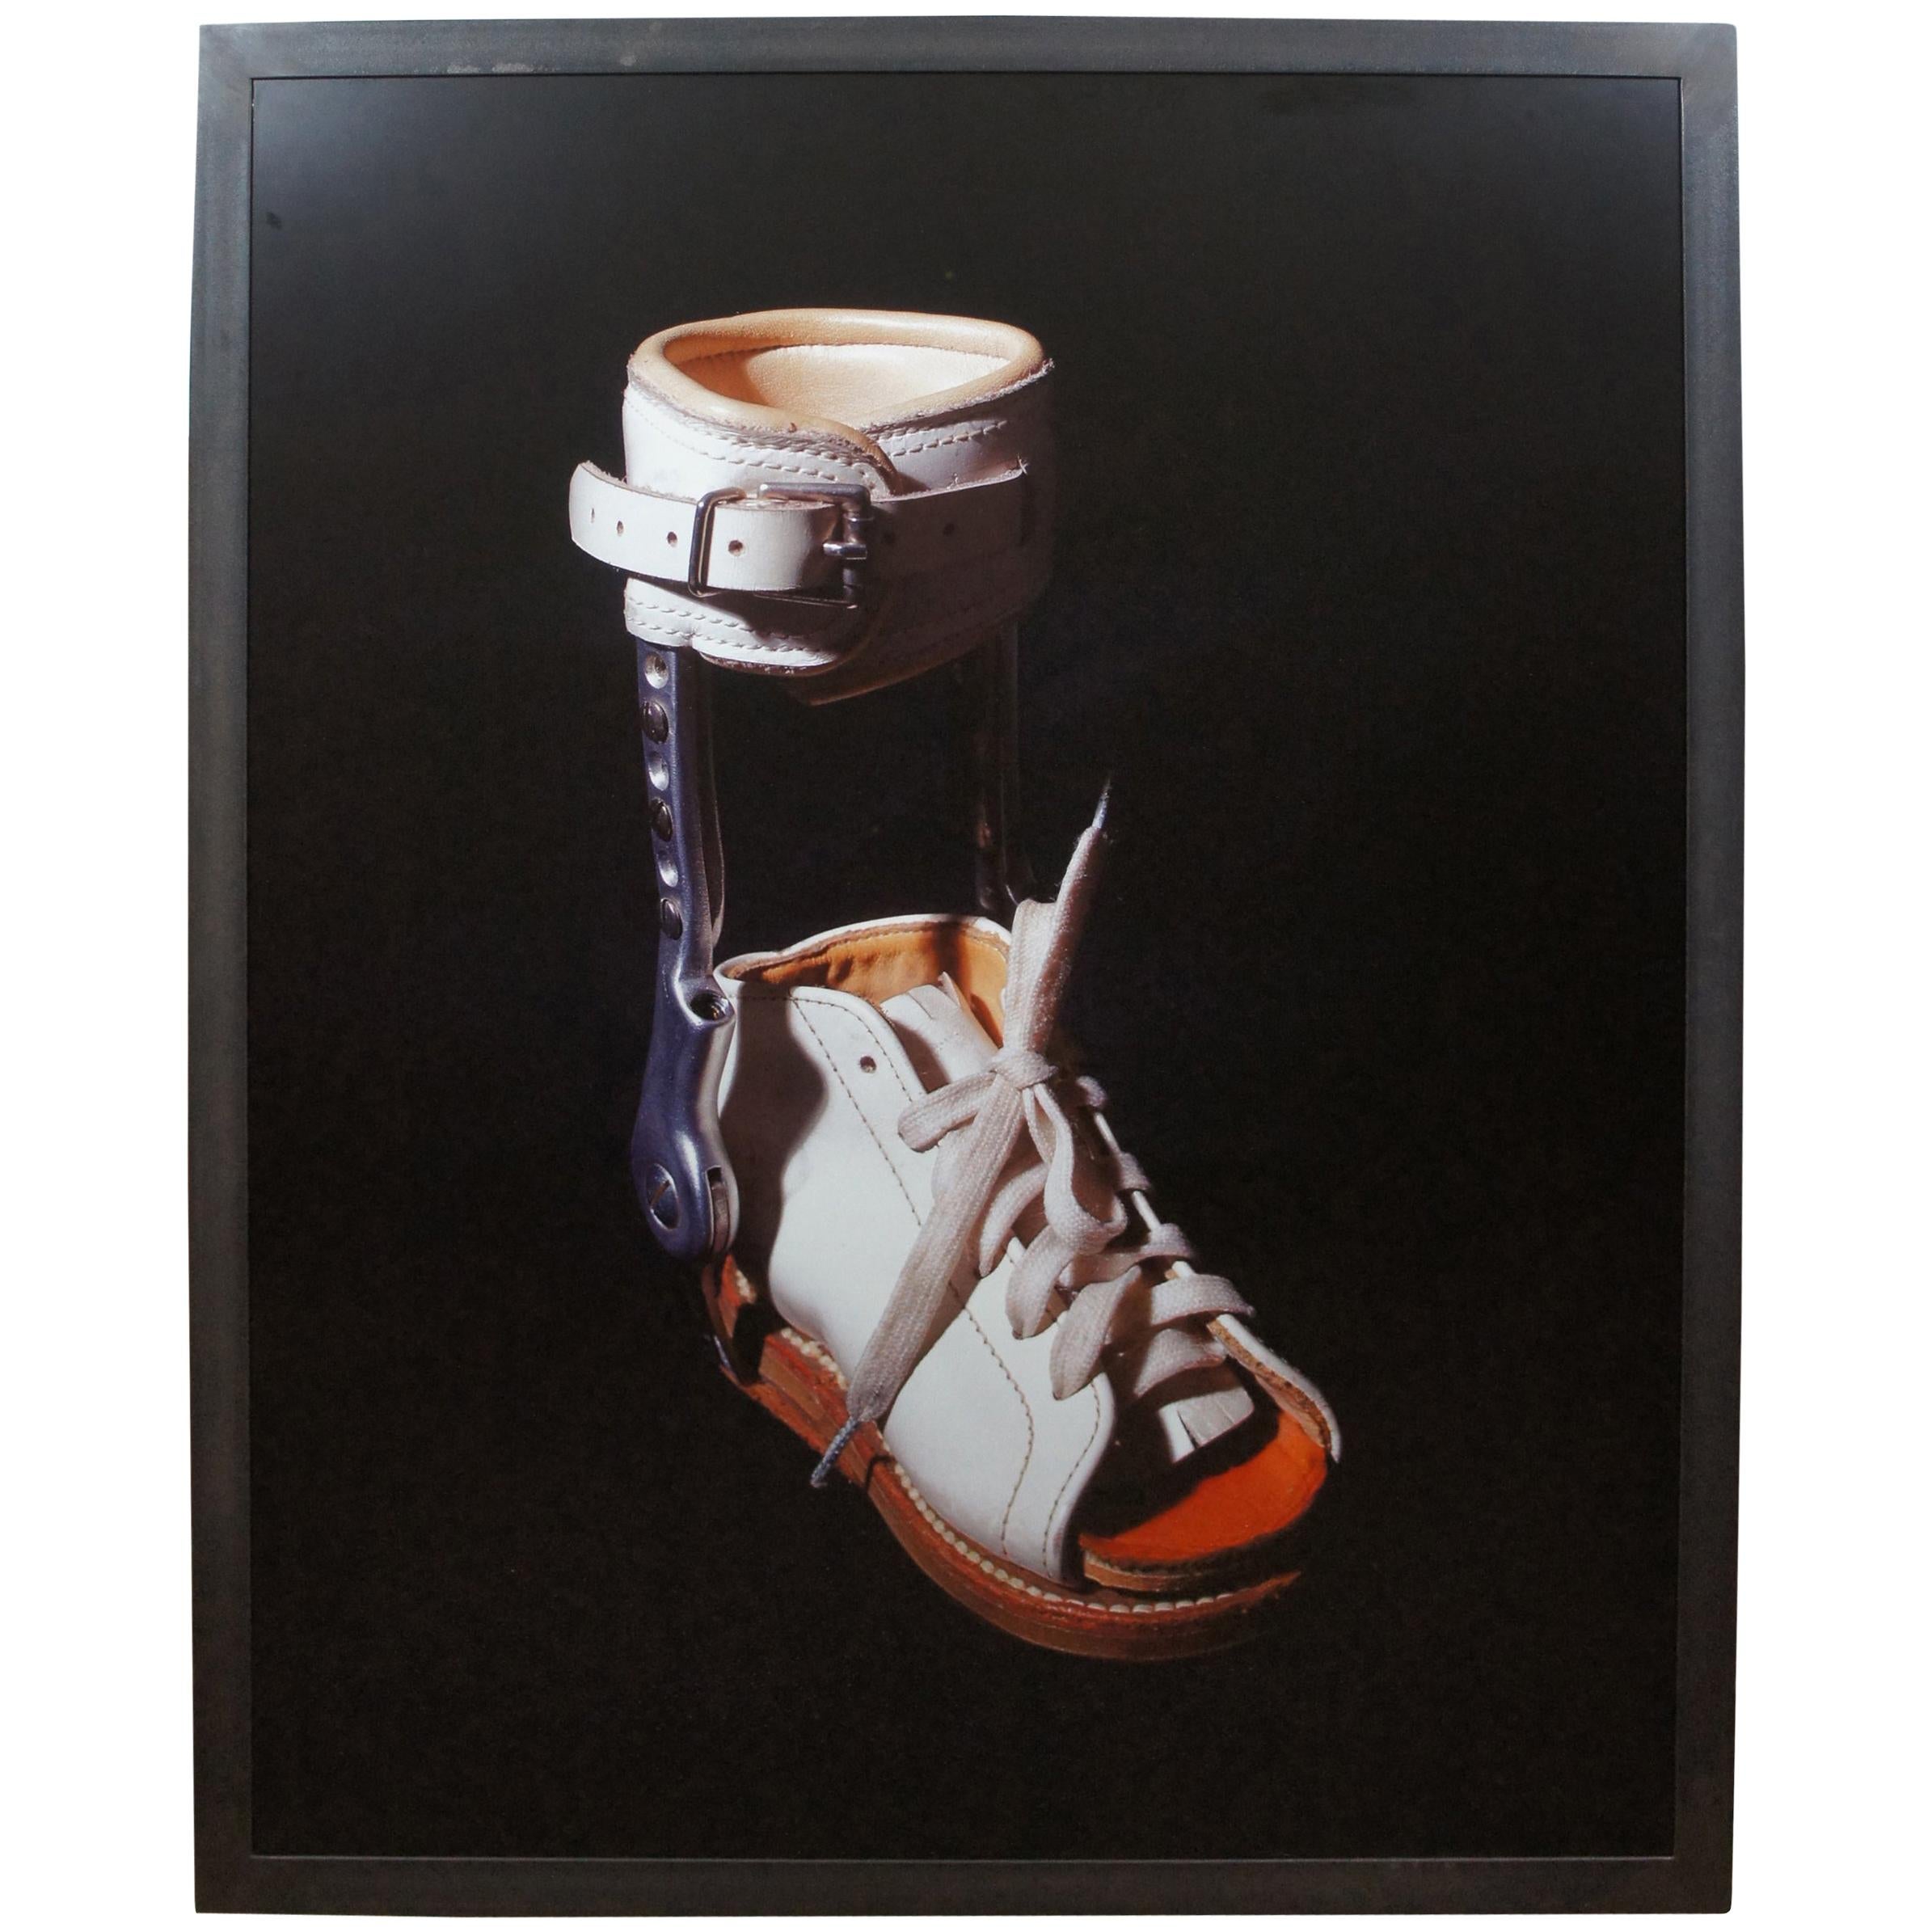 1993 Janet Biggs "One" Cibachrome Photograph Leg Brace For Sale